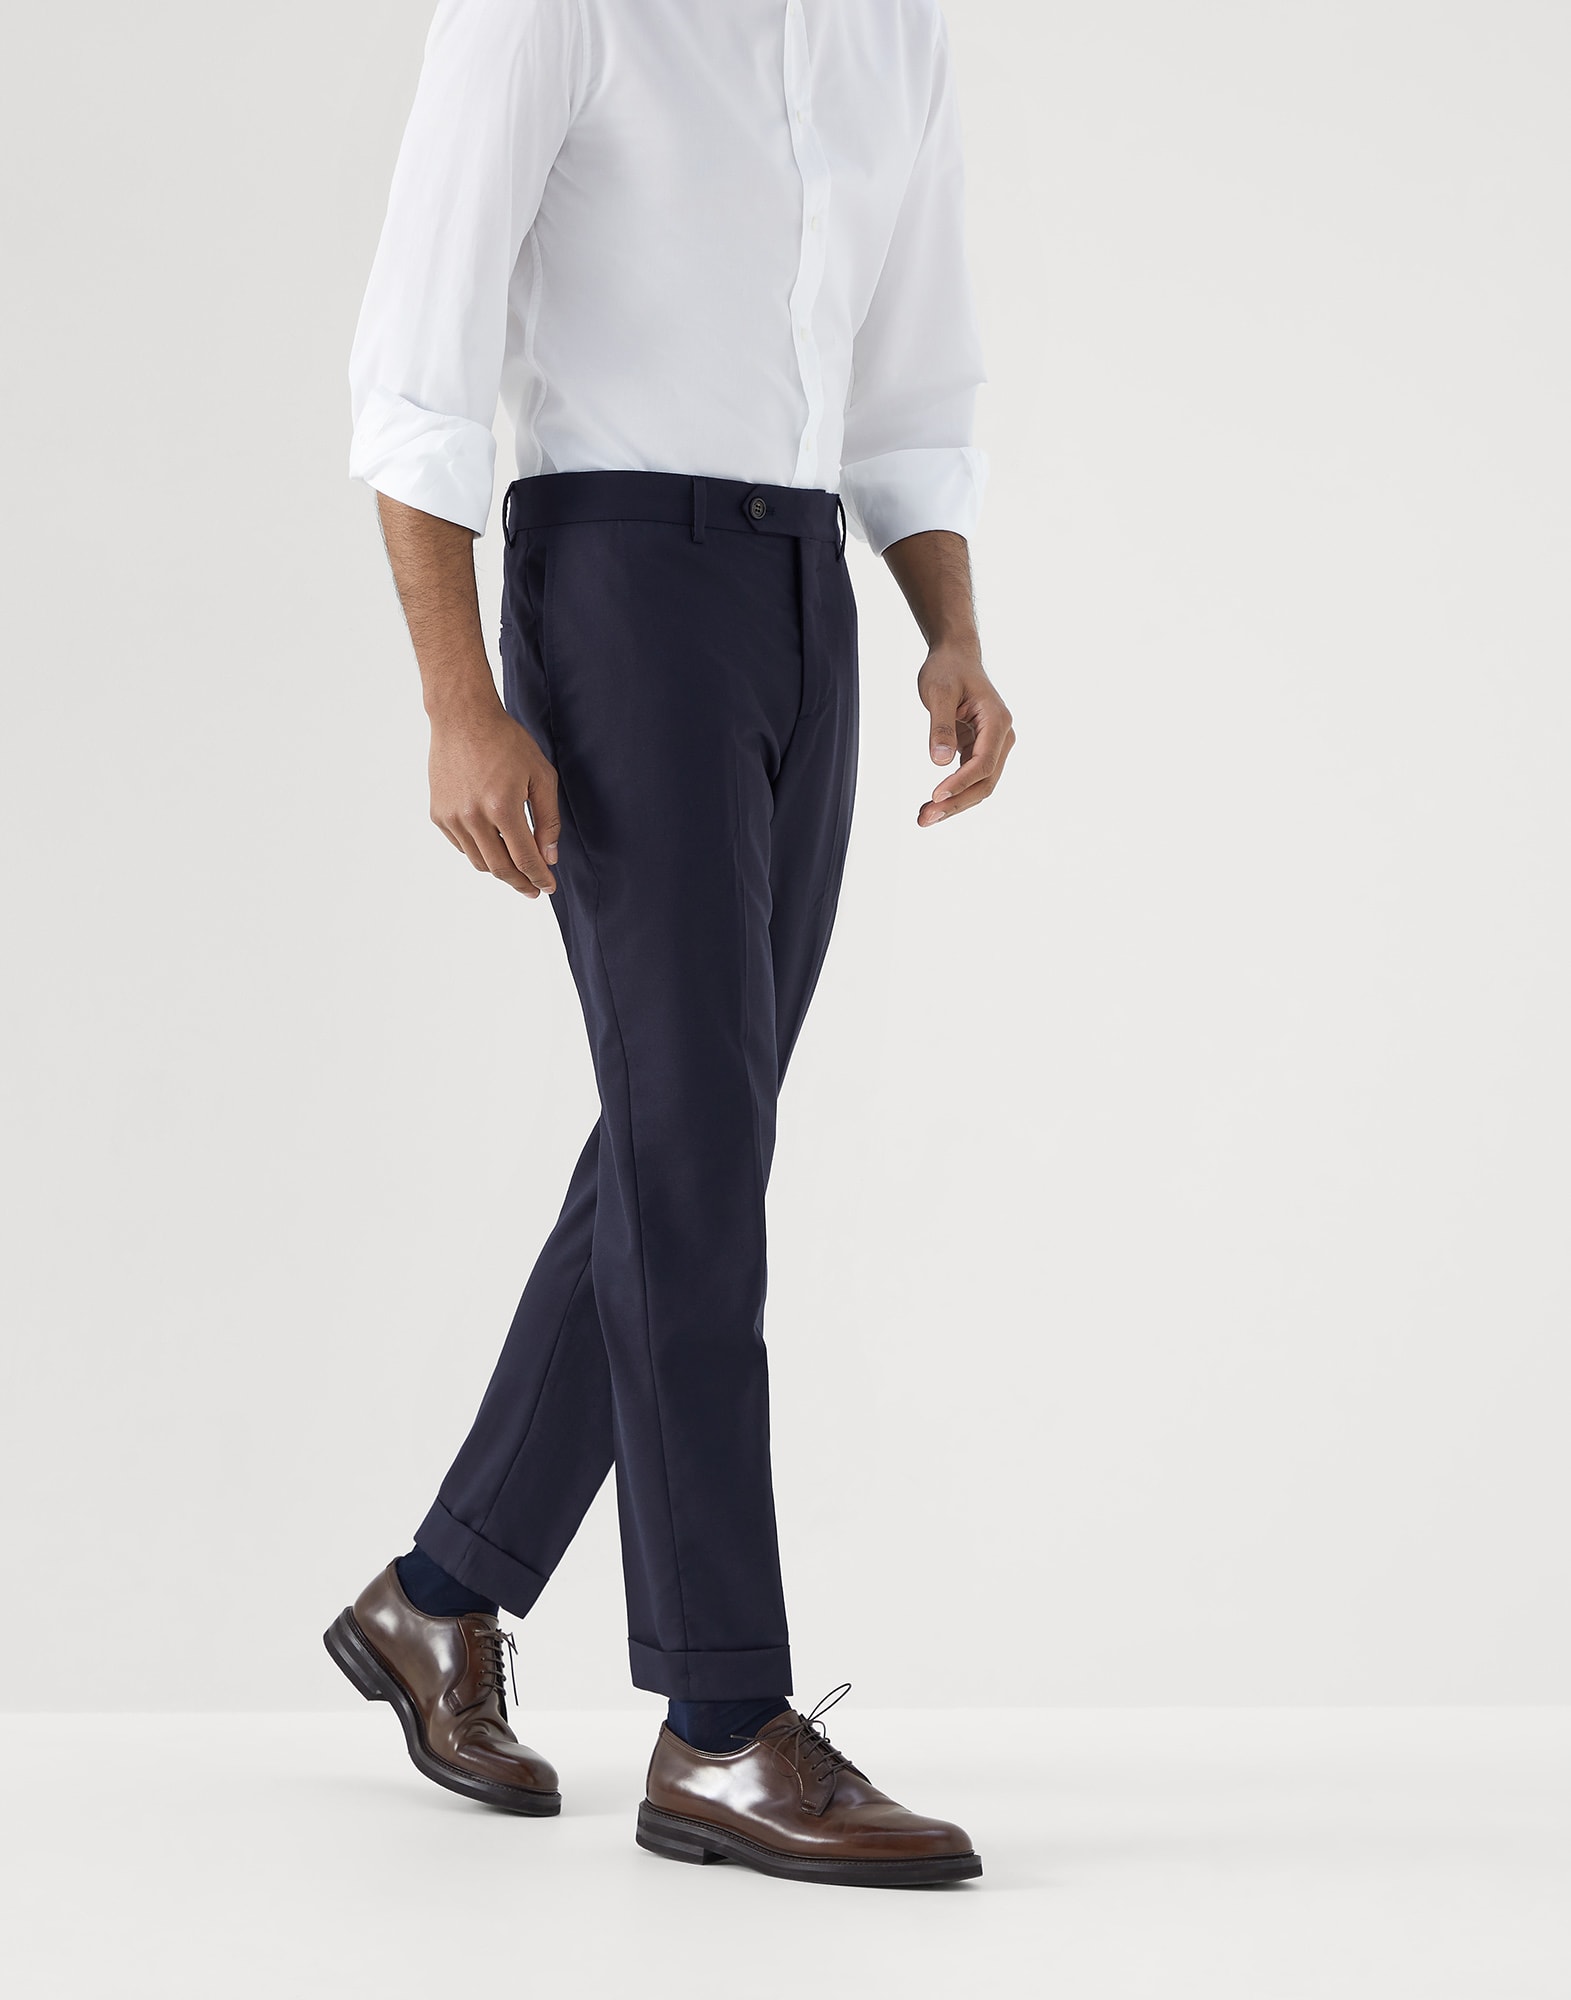 Pantalone formal fit Blu Navy Uomo - Brunello Cucinelli